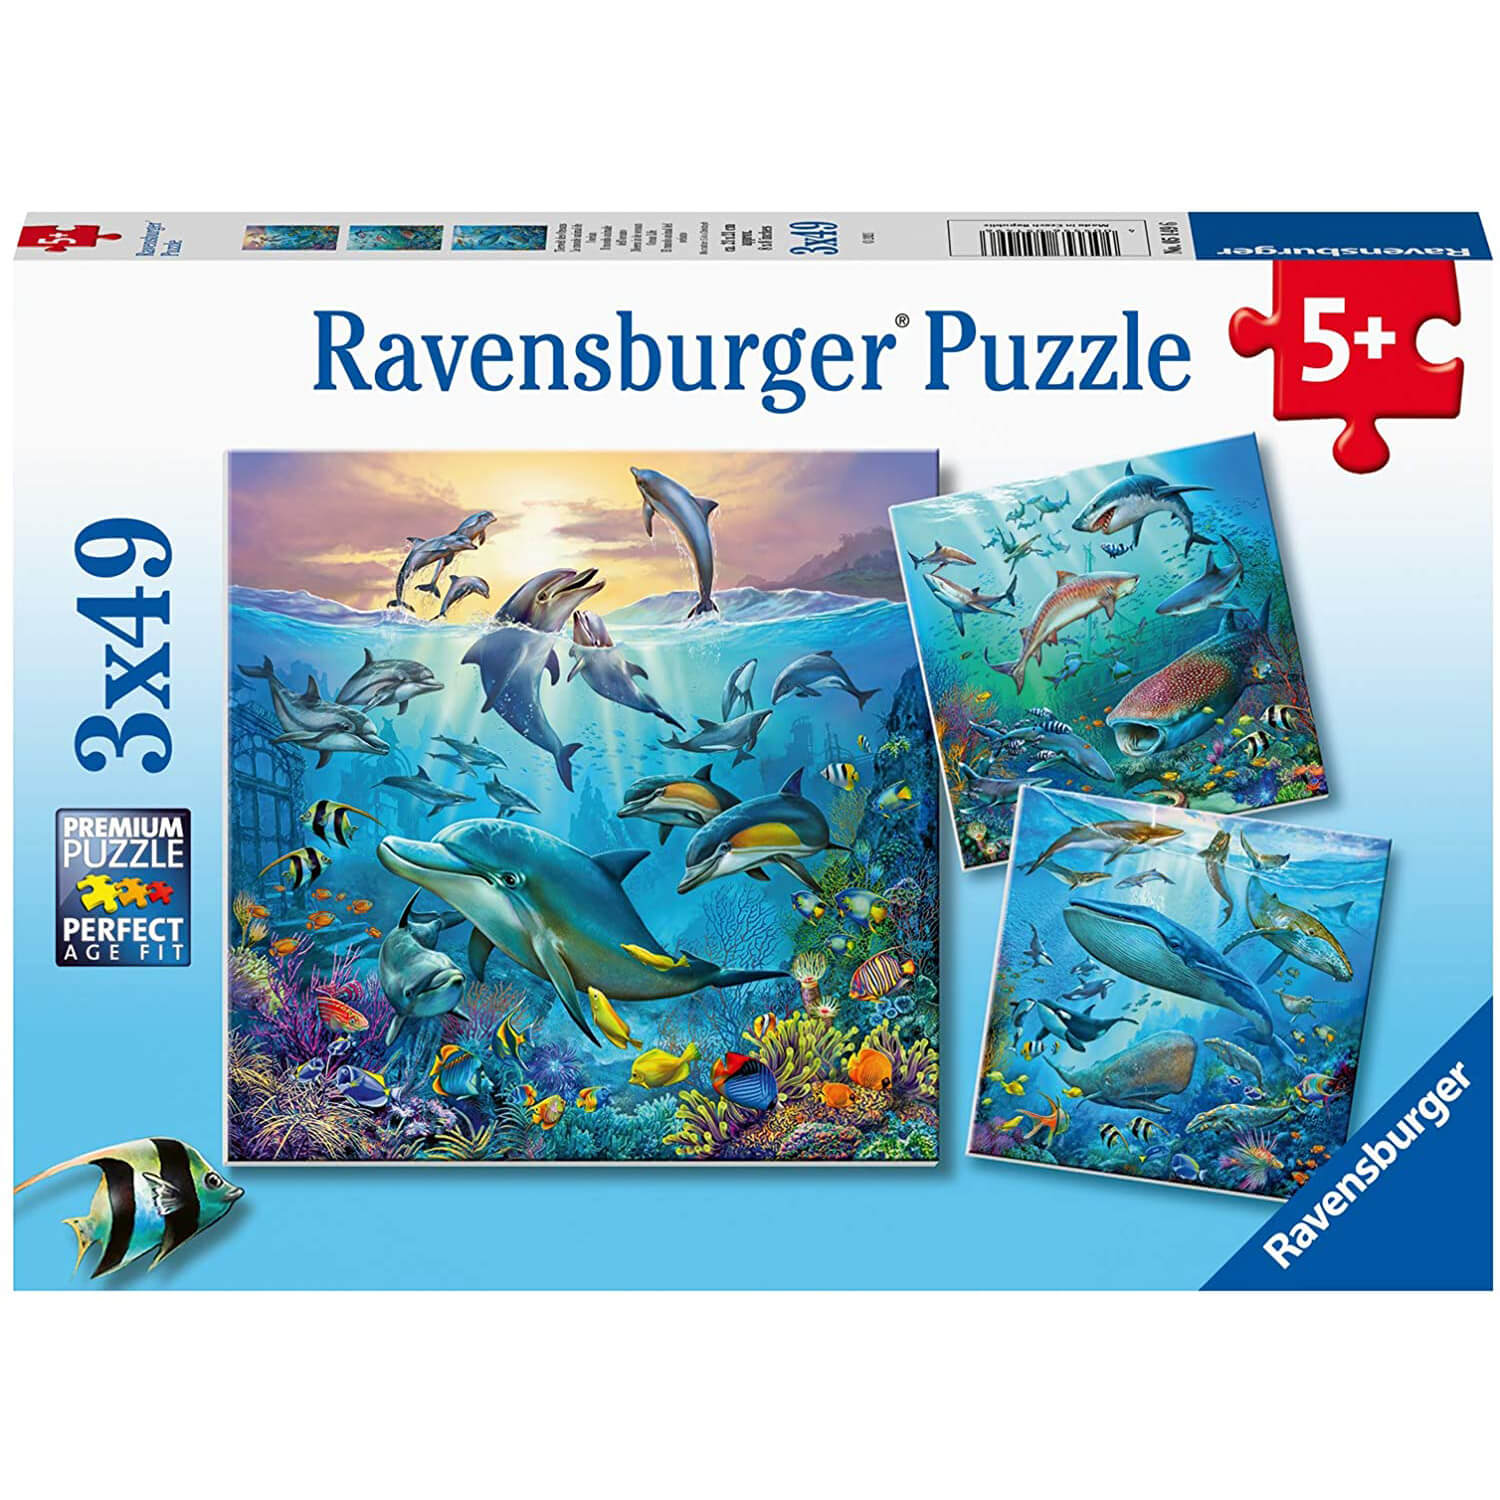 Ravensburger Ocean Life 3 x 49 Piece Puzzle